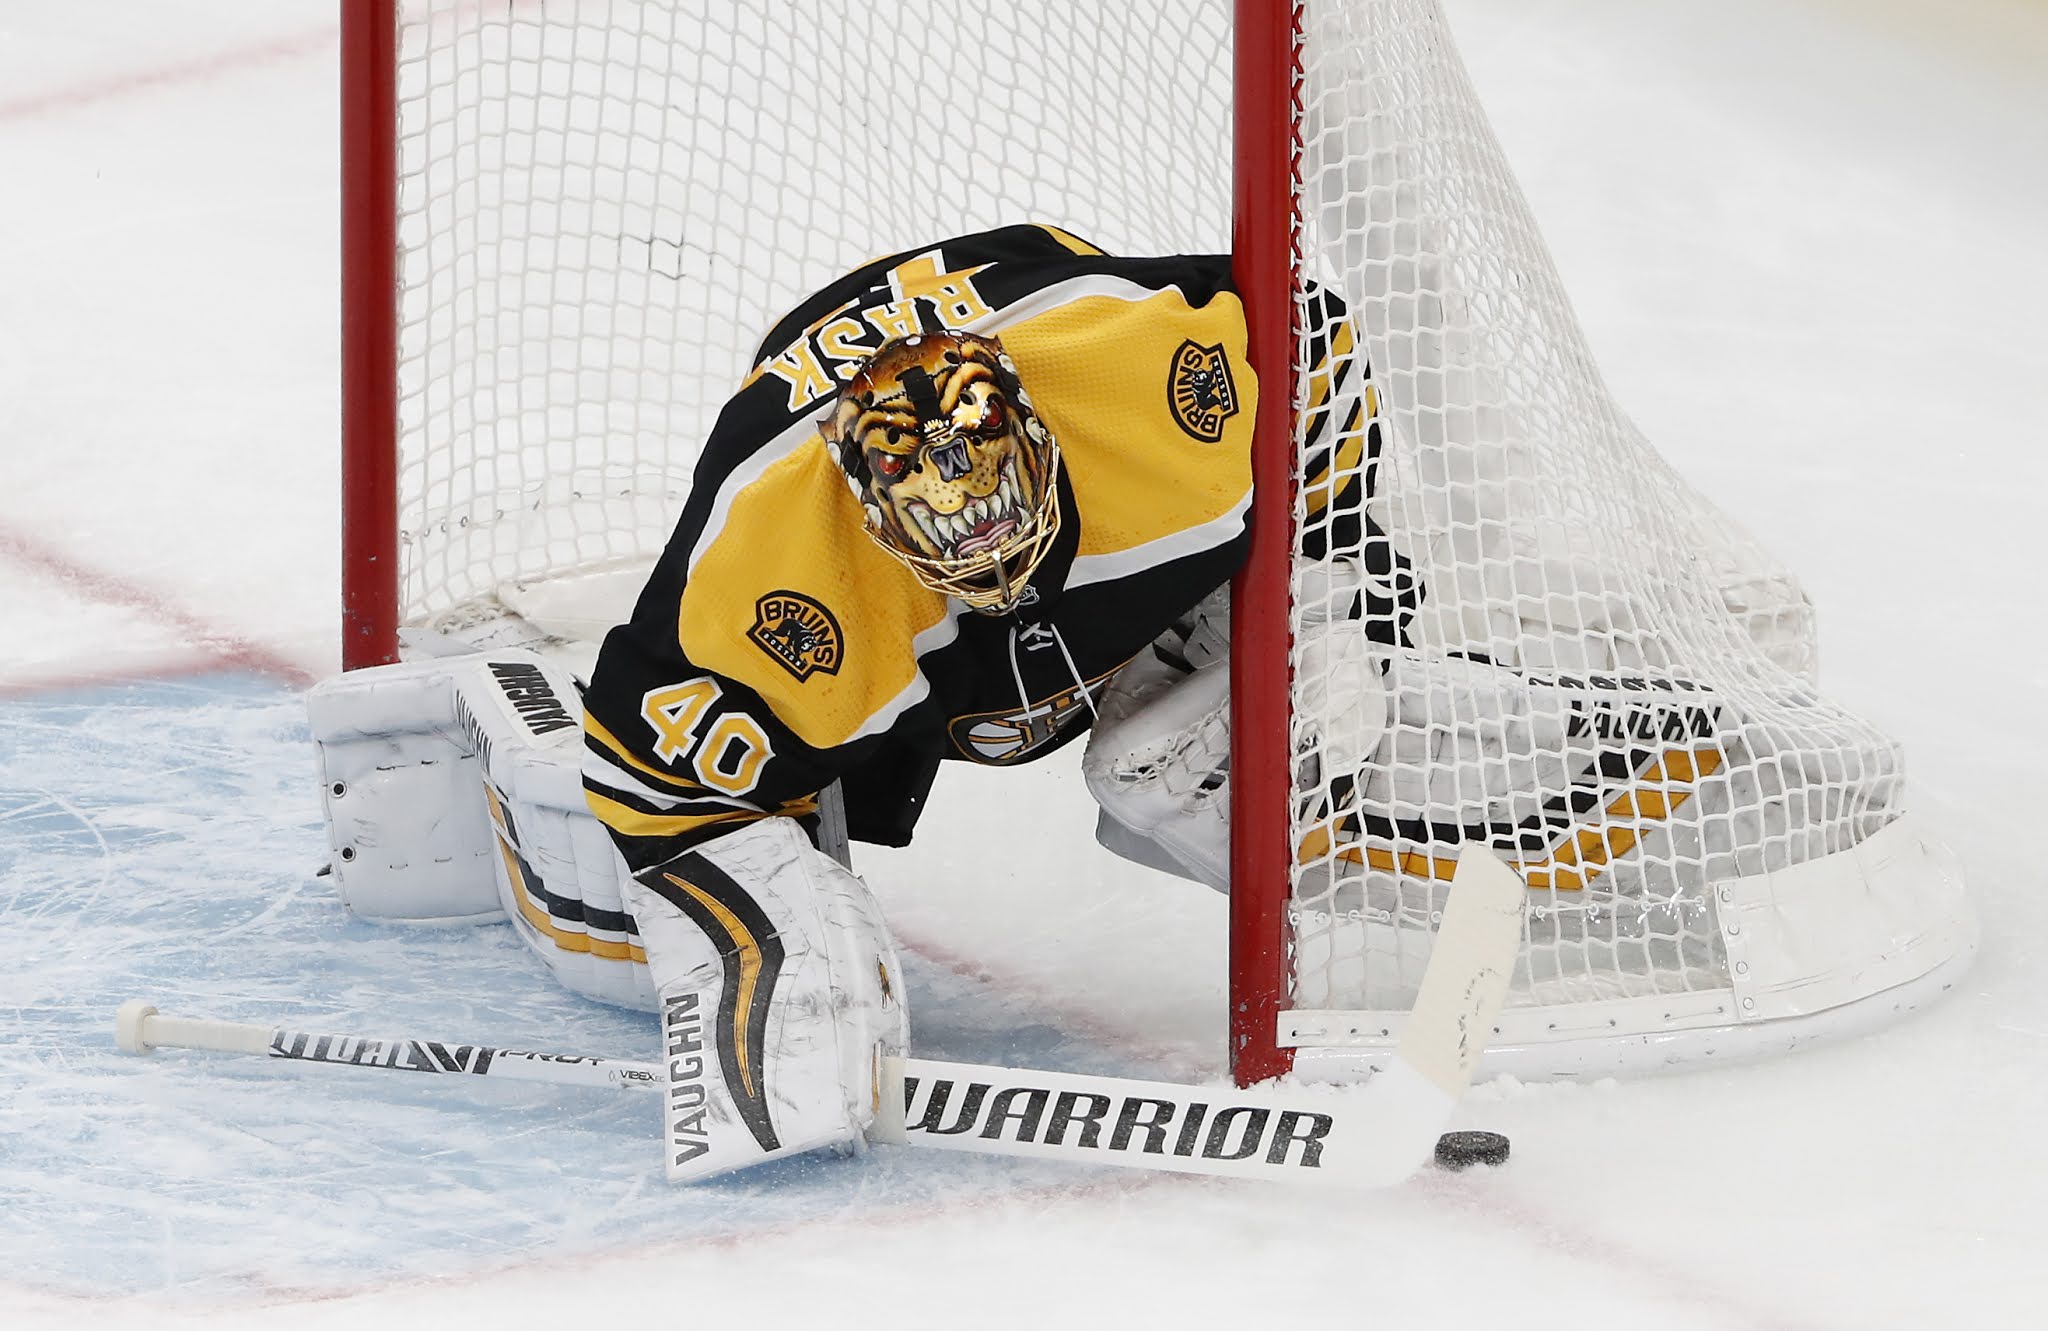 Boston Bruins: We Might Be Reaching The End Of The Tuukka Rask Era